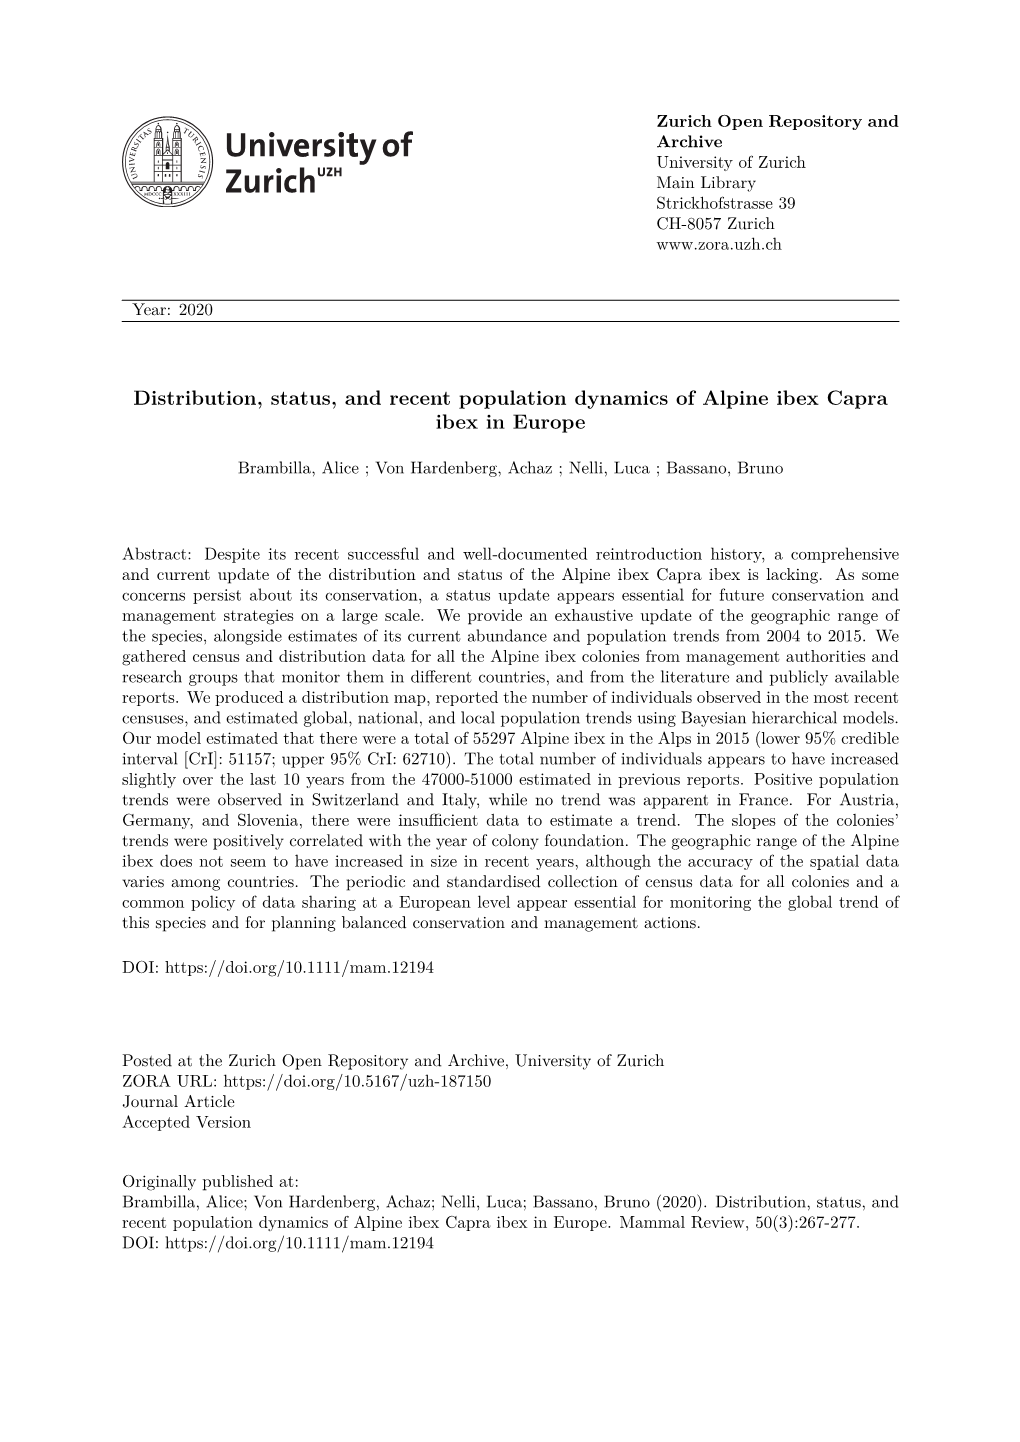 'Distribution, Status, and Recent Population Dynamics of Alpine Ibex Capra Ibex in Europe'